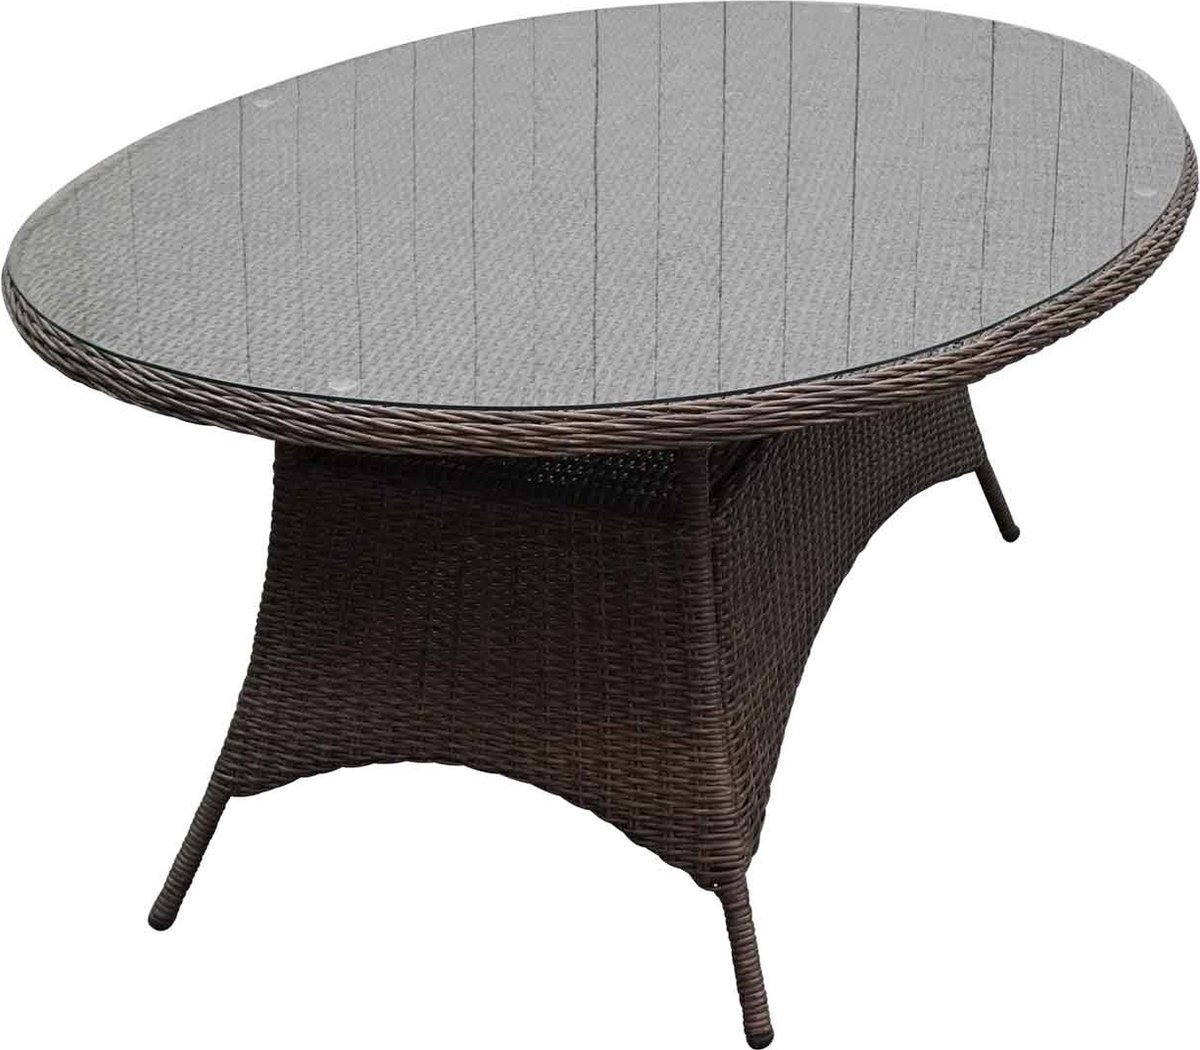 Denza Furniture Elip dining wicker tuintafel ovaal | aluminium + wicker | Natural Grey | 200x130cm - ovale wicker tuintafel | 6 personen